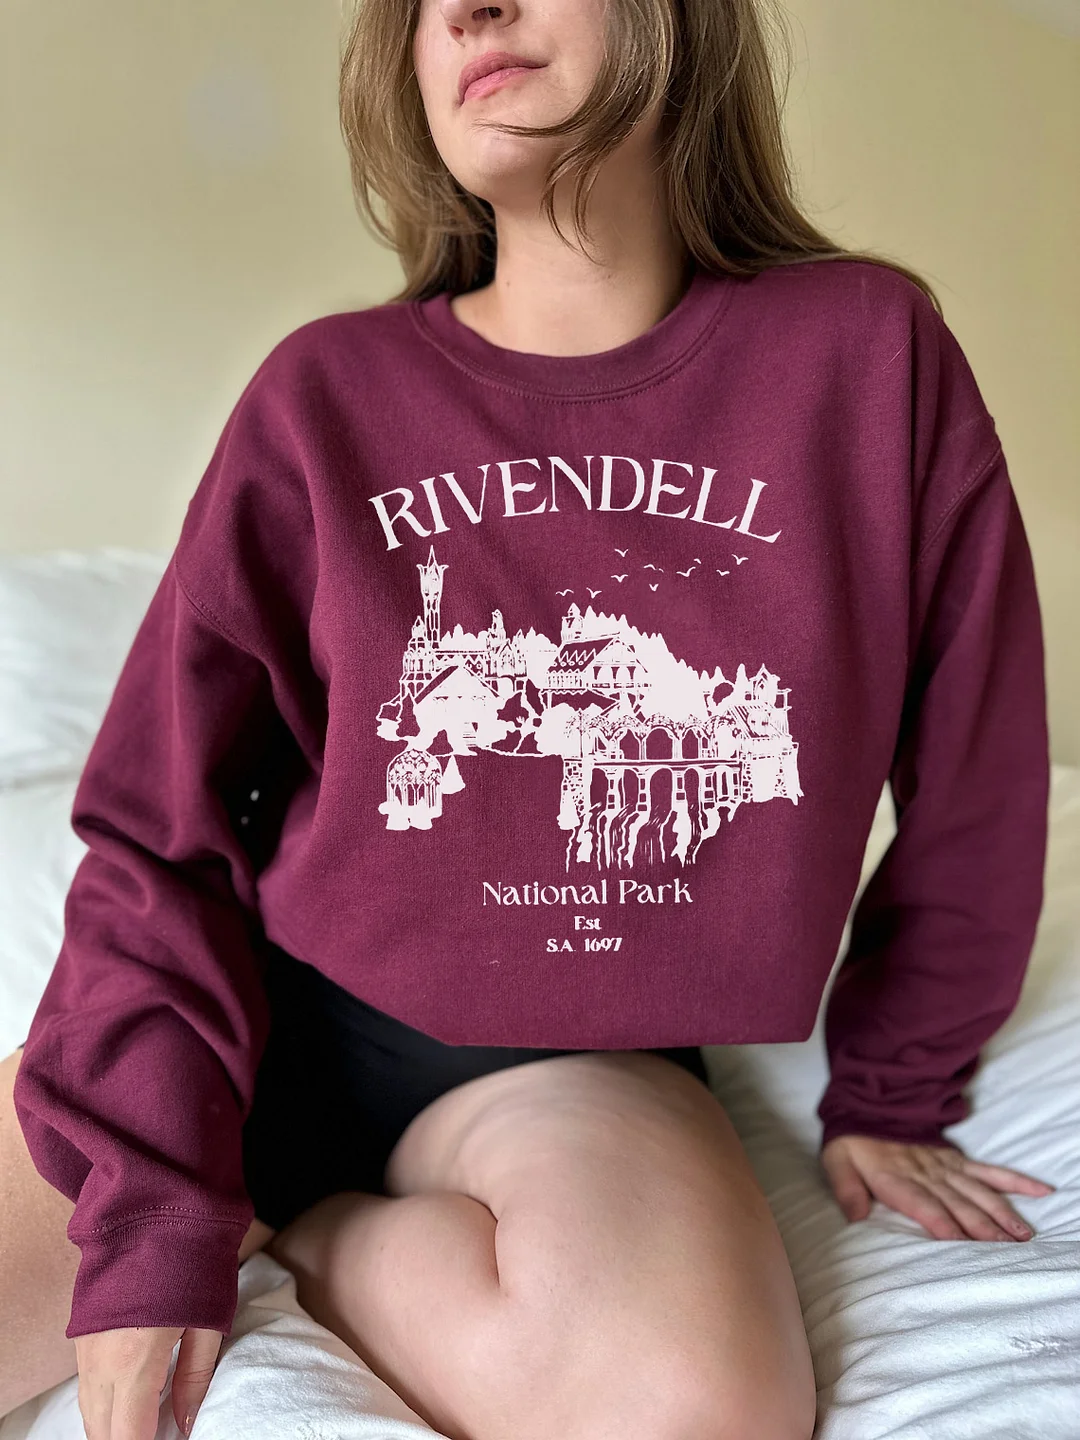 LOTR Sweatshirt. Rivendell Sweatshirt. National Park. Fellowship Sweatshirt. / DarkAcademias /Darkacademias